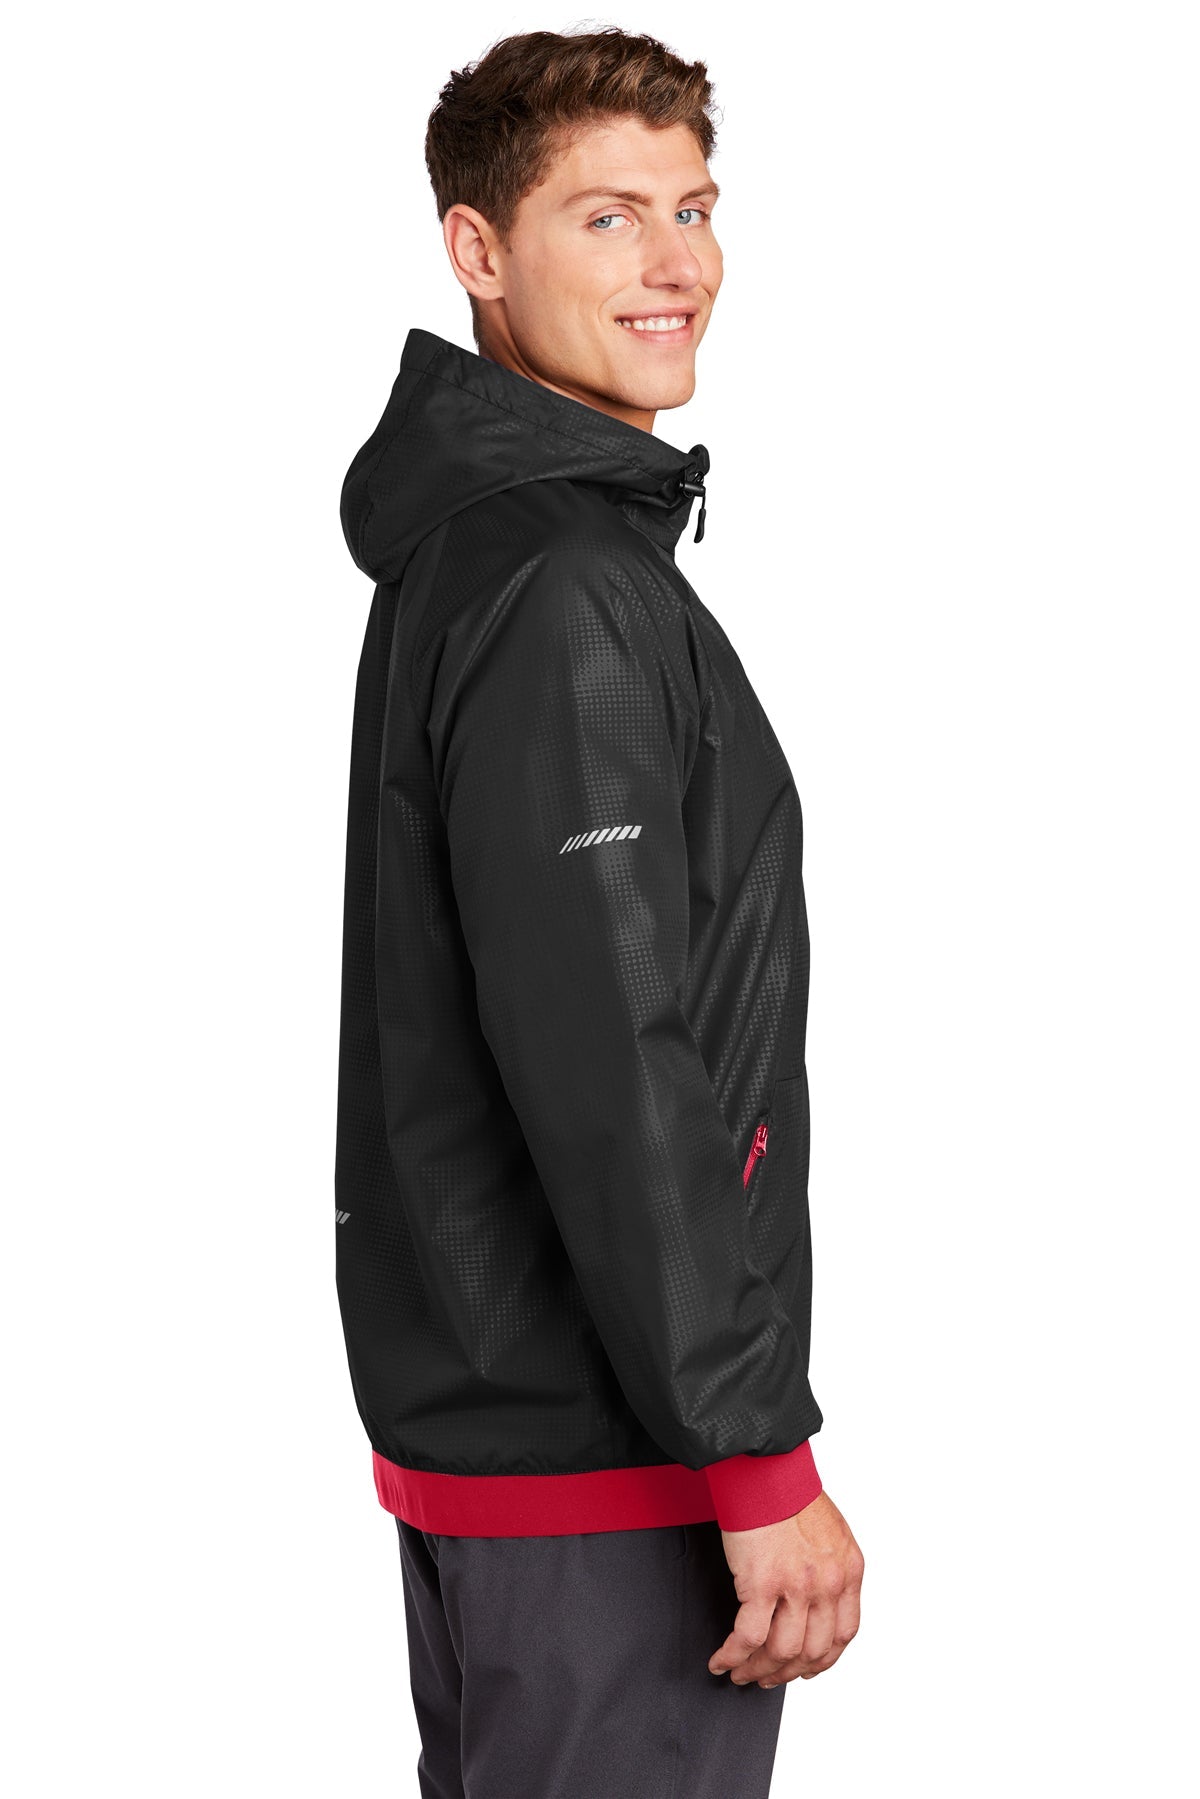 sport-tek_jst53 _black/ true red_company_logo_jackets